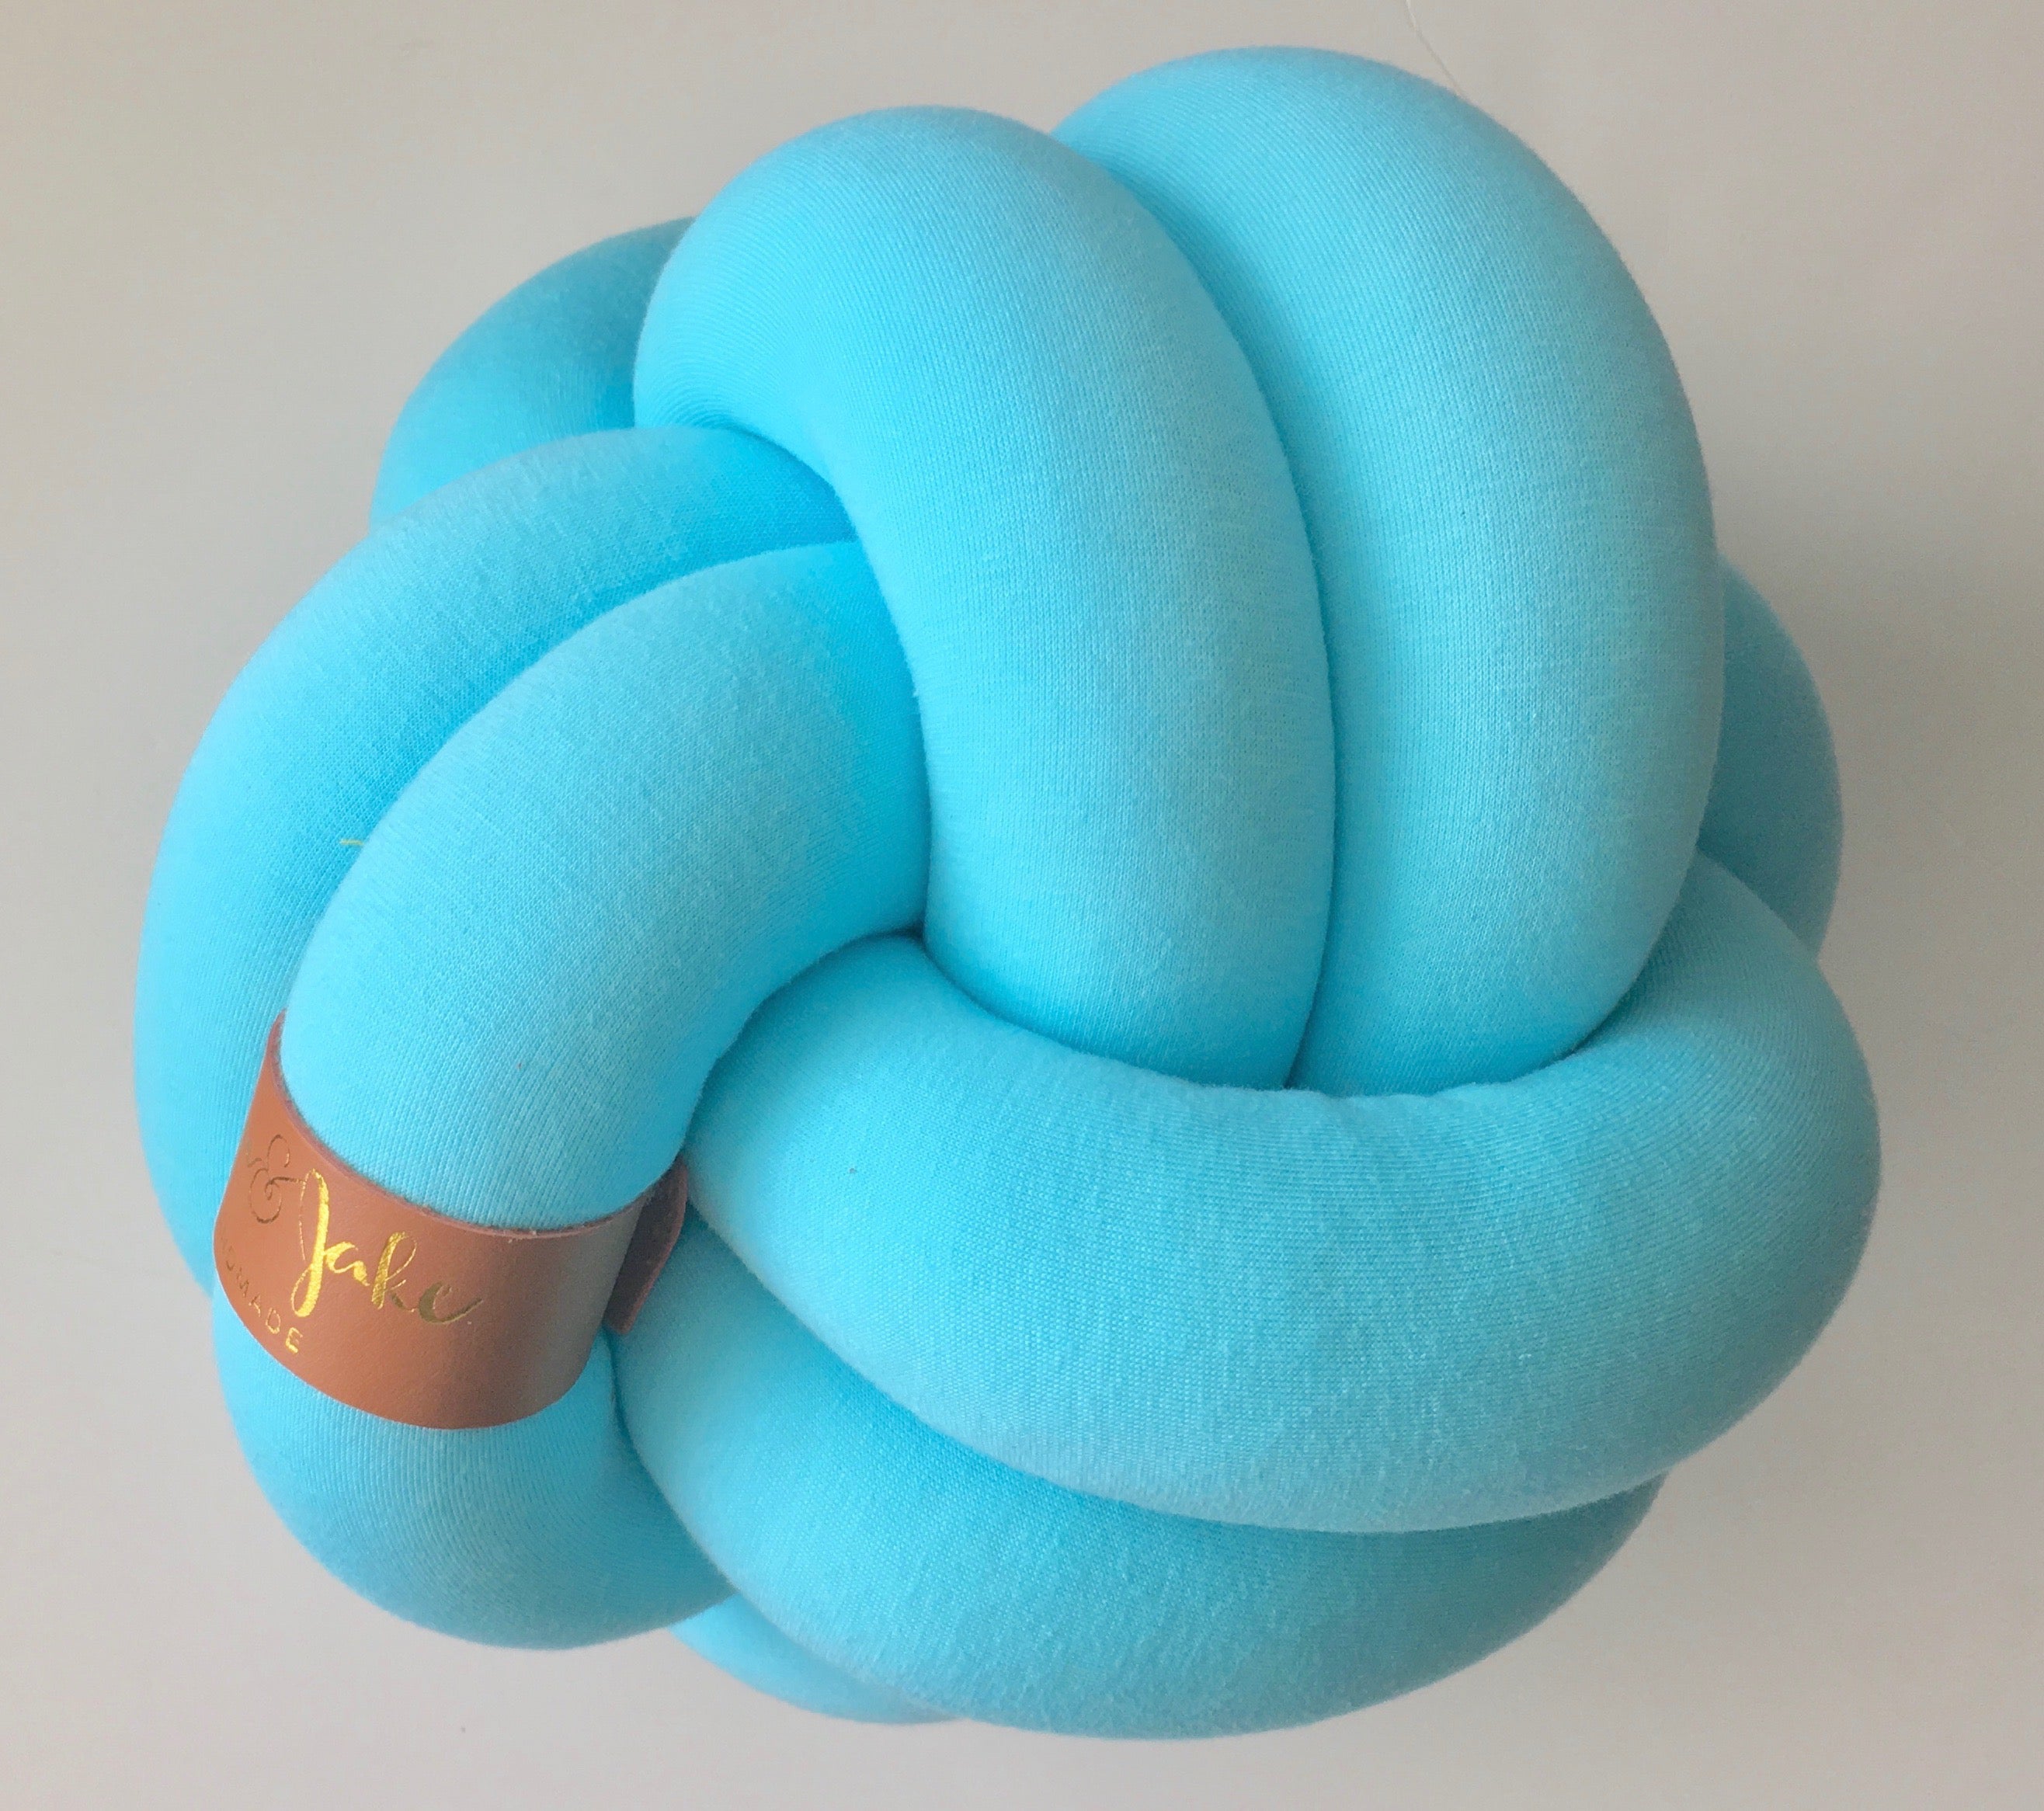 Aqua | Medium Sphere Knot Pillow - See more Knot Pillows & Cushions at JujuAndJake.com